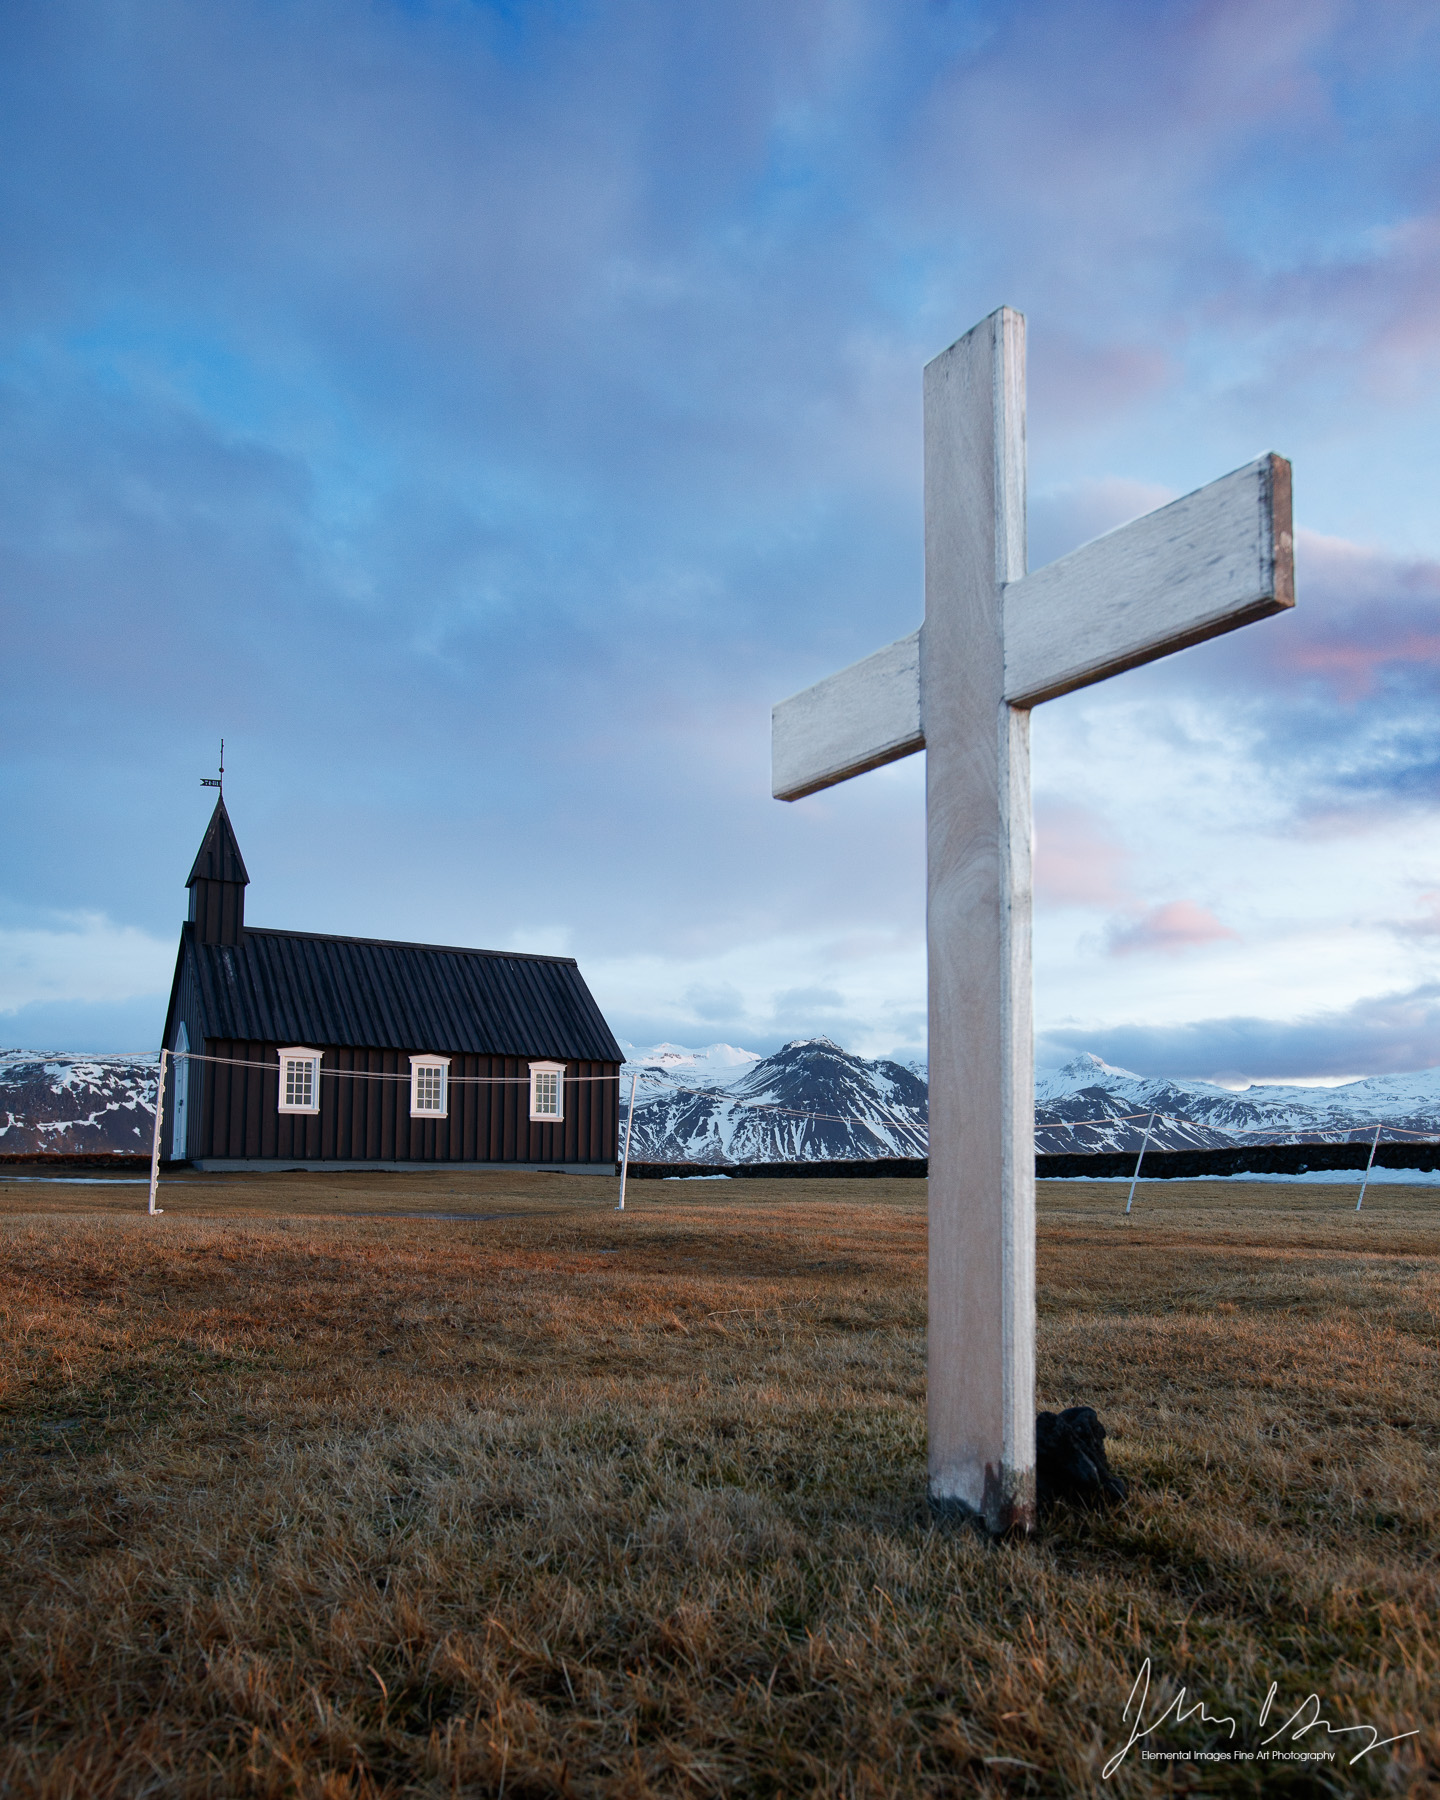 Black church of Buđir | Búđir |  | Iceland - © 2024 Elemental Images Fine Art Photography - All Rights Reserved Worldwide